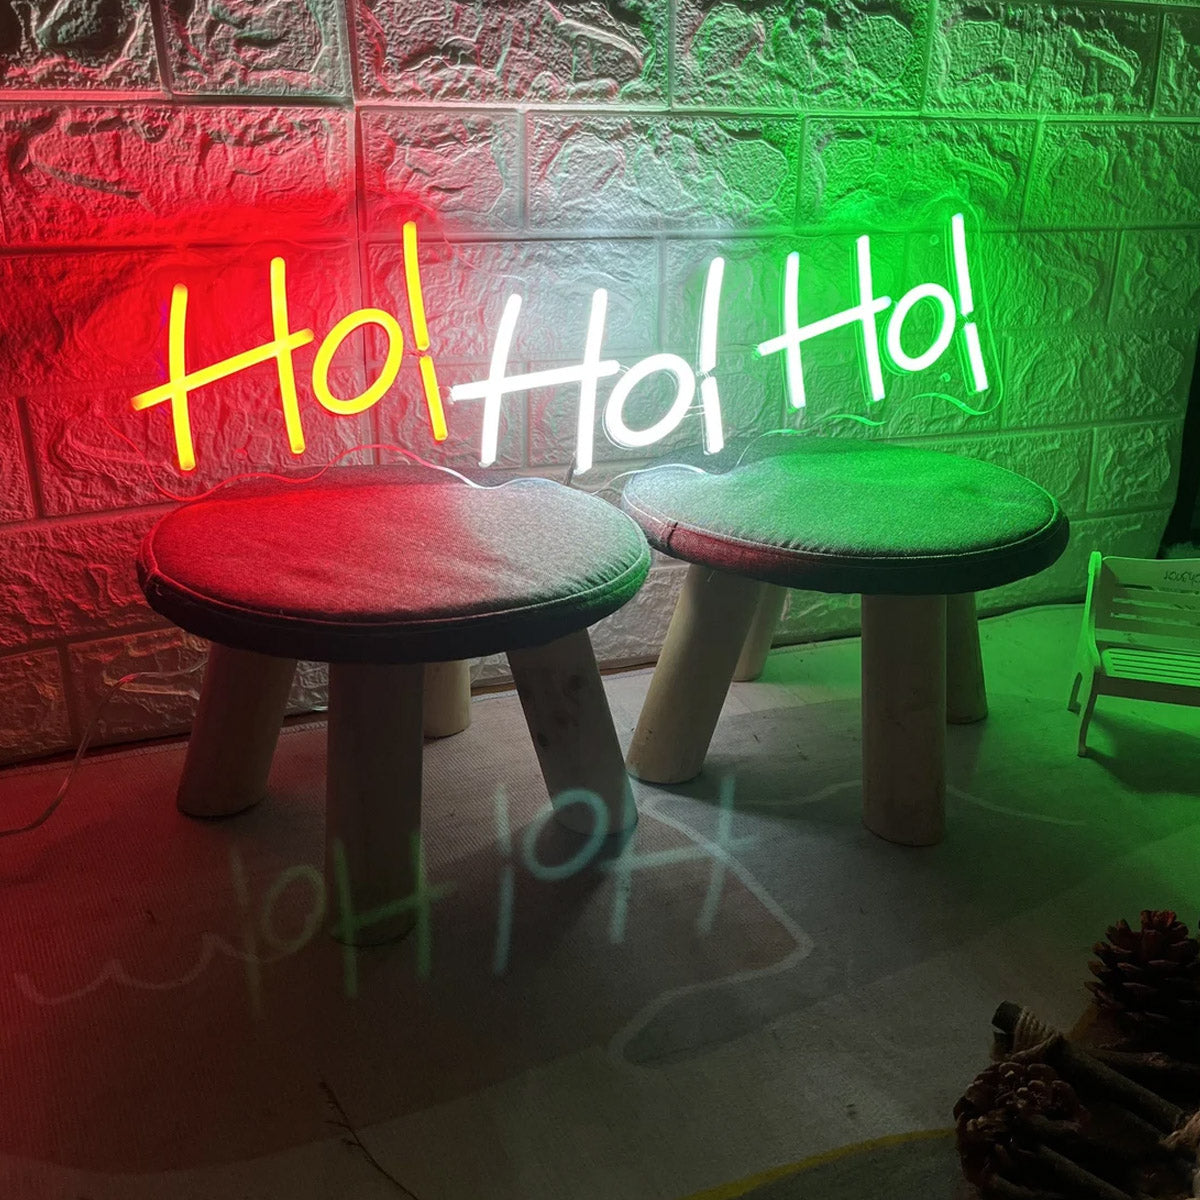 NEONIP-100% Handmade Merry Christmas Ho!Ho!Ho! Neon Sign Led Sign for Christmas Eve